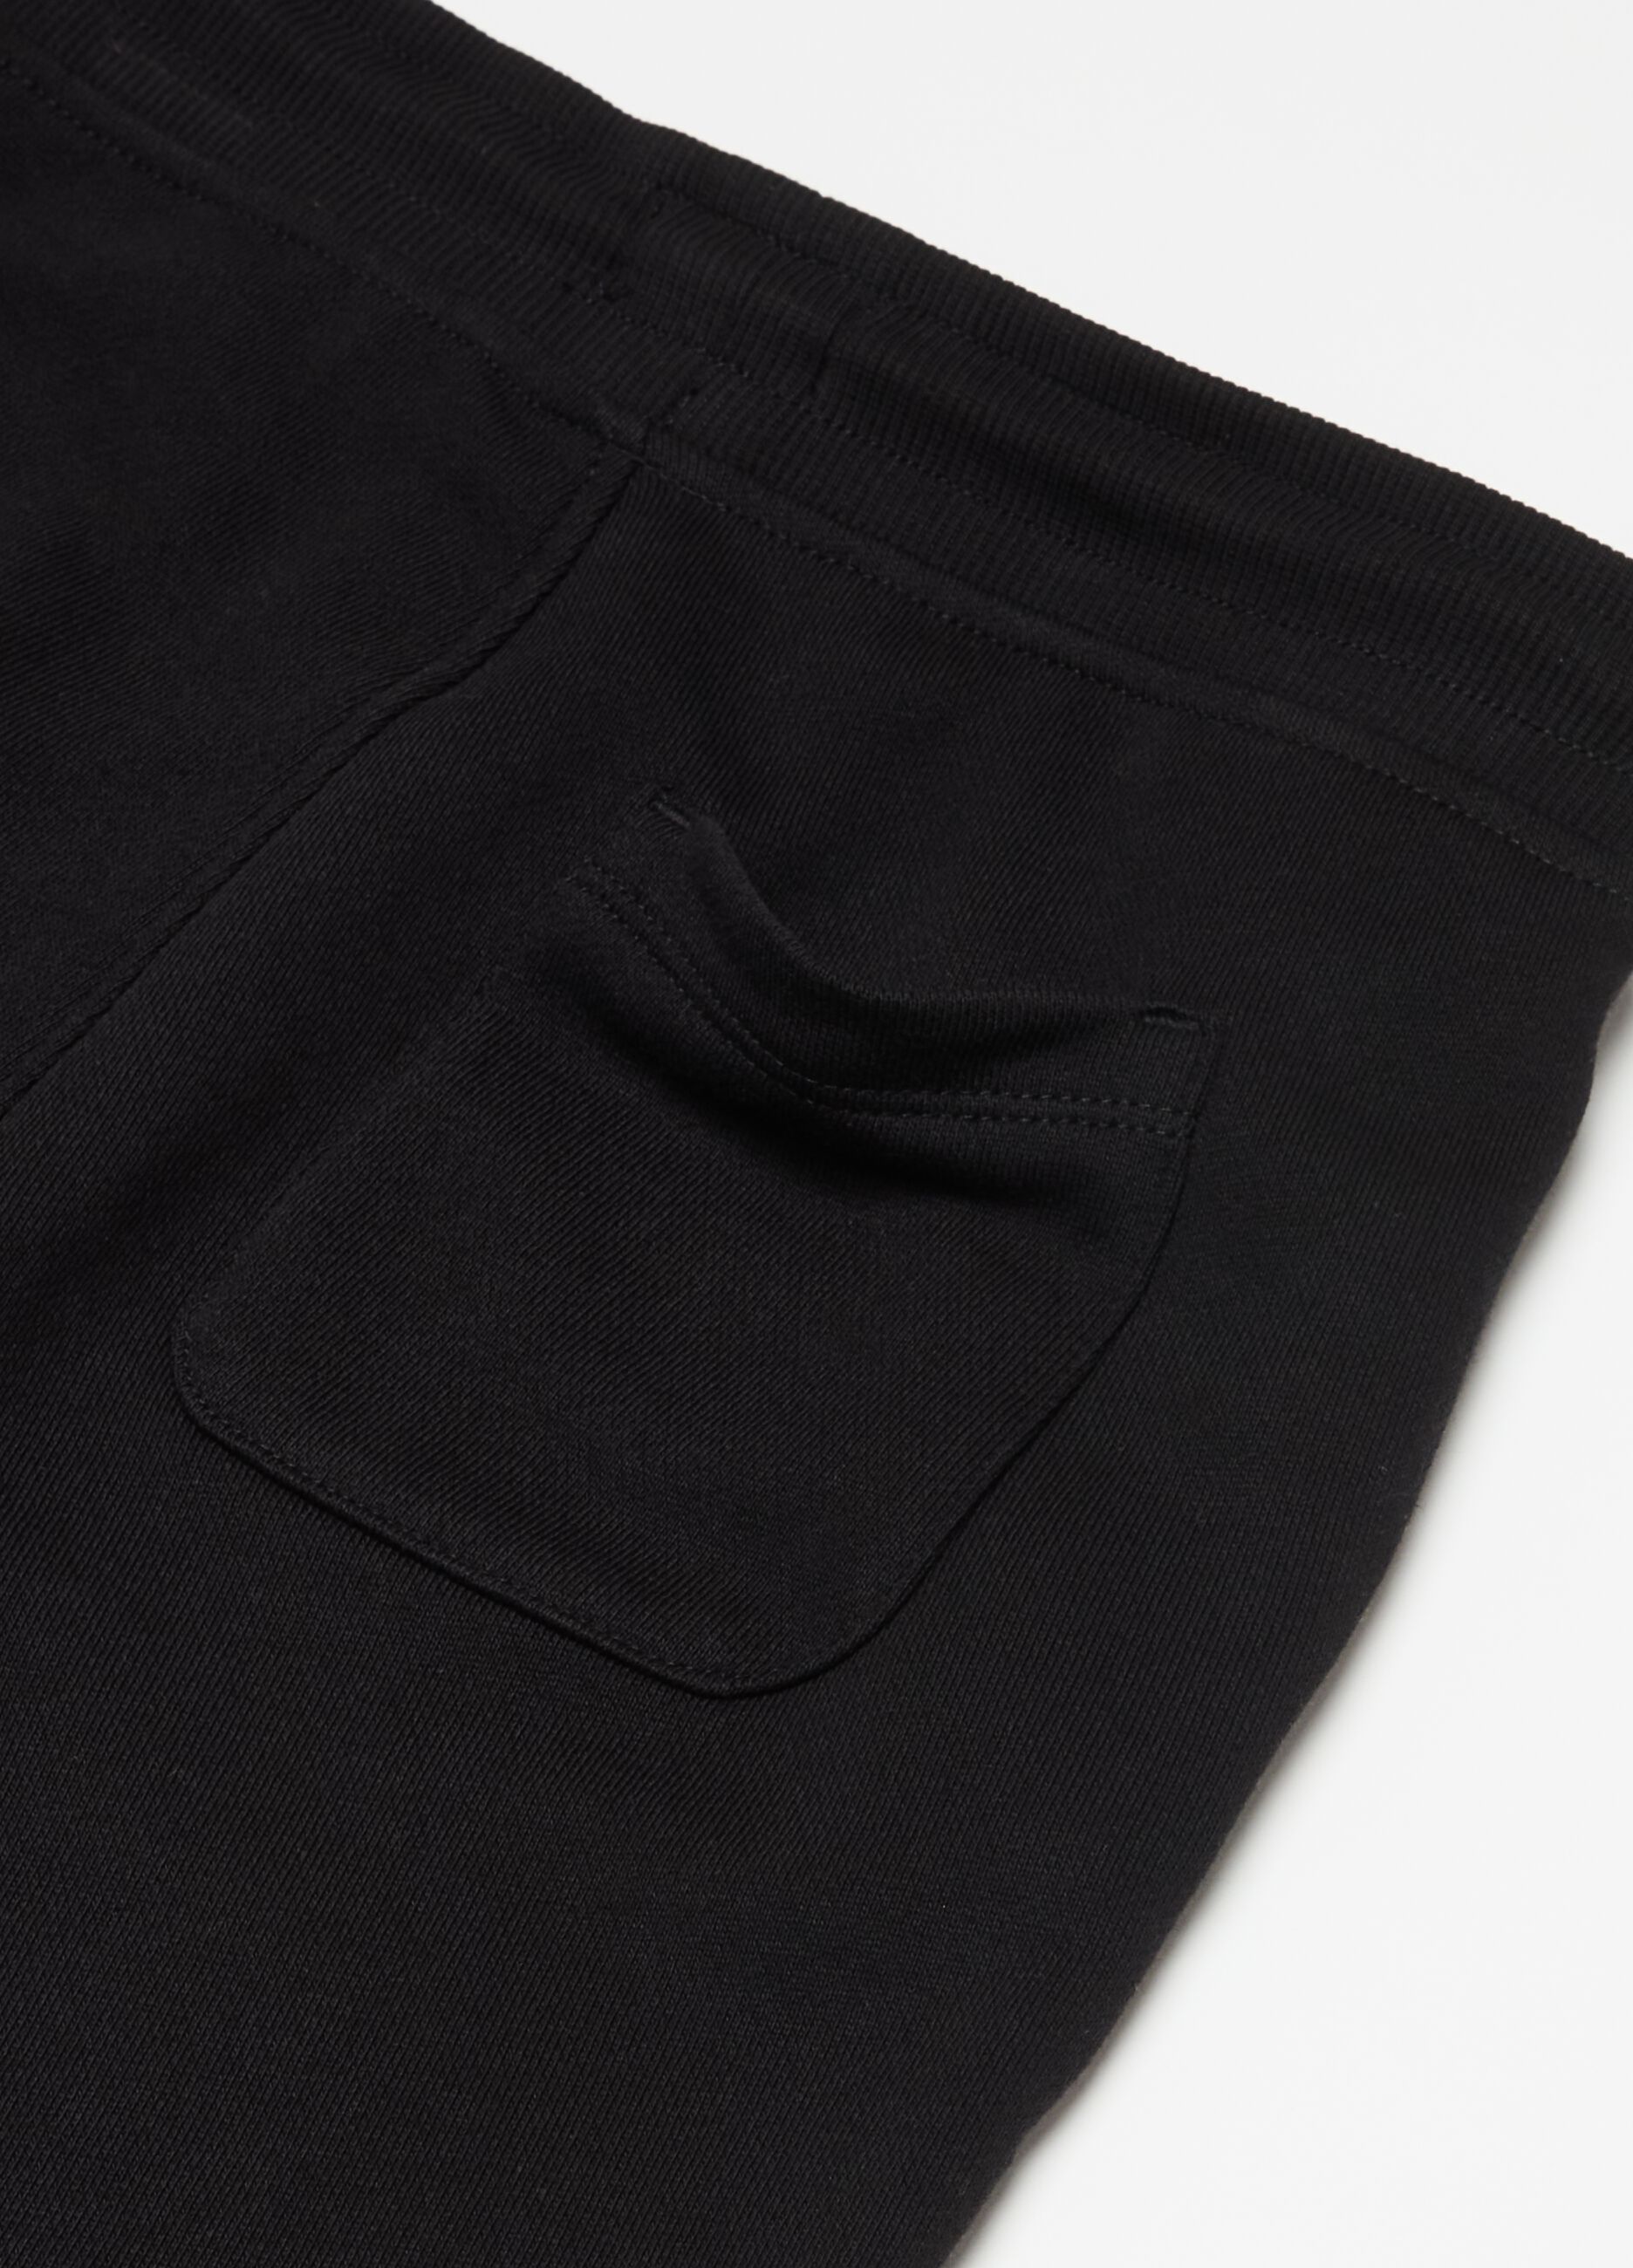 Essential Bermuda shorts in organic cotton fleece